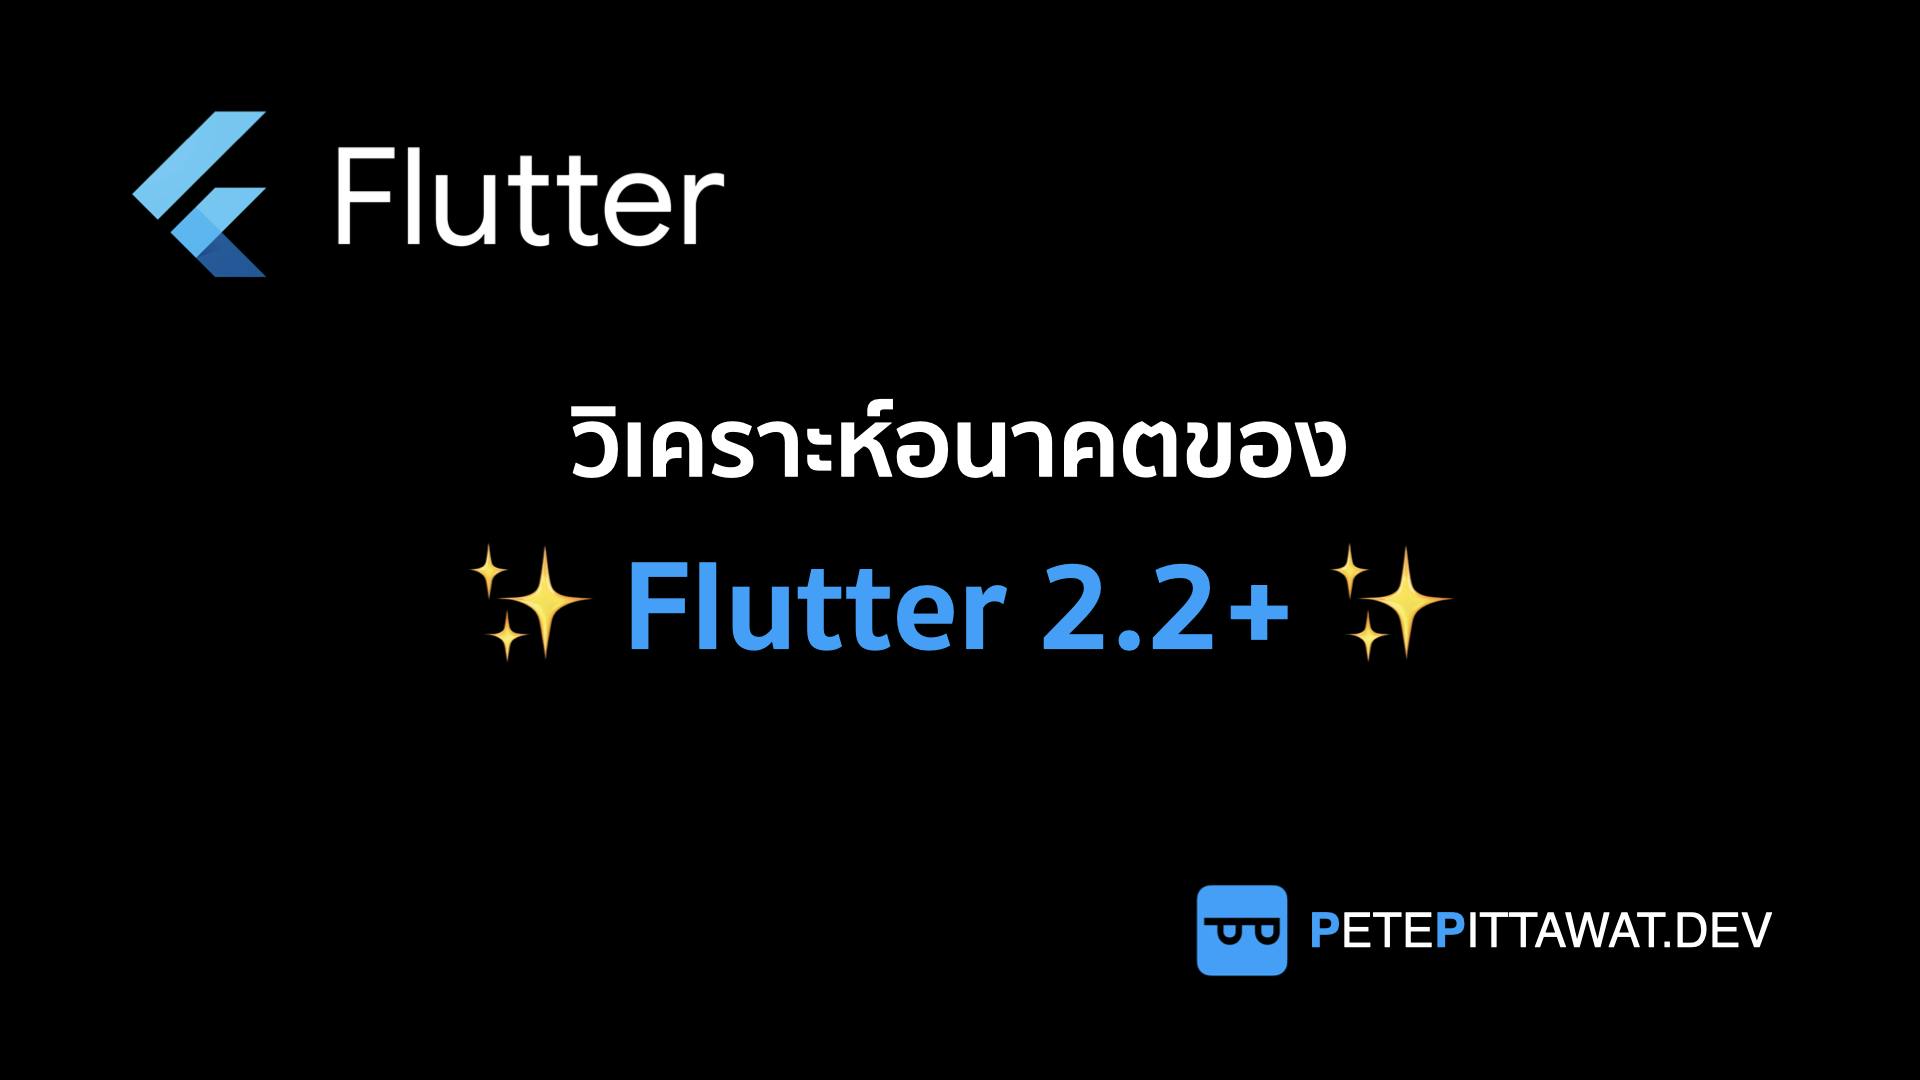 Cover Image for Flutter: วิเคราะห์อนาคตของ Flutter 2.2+